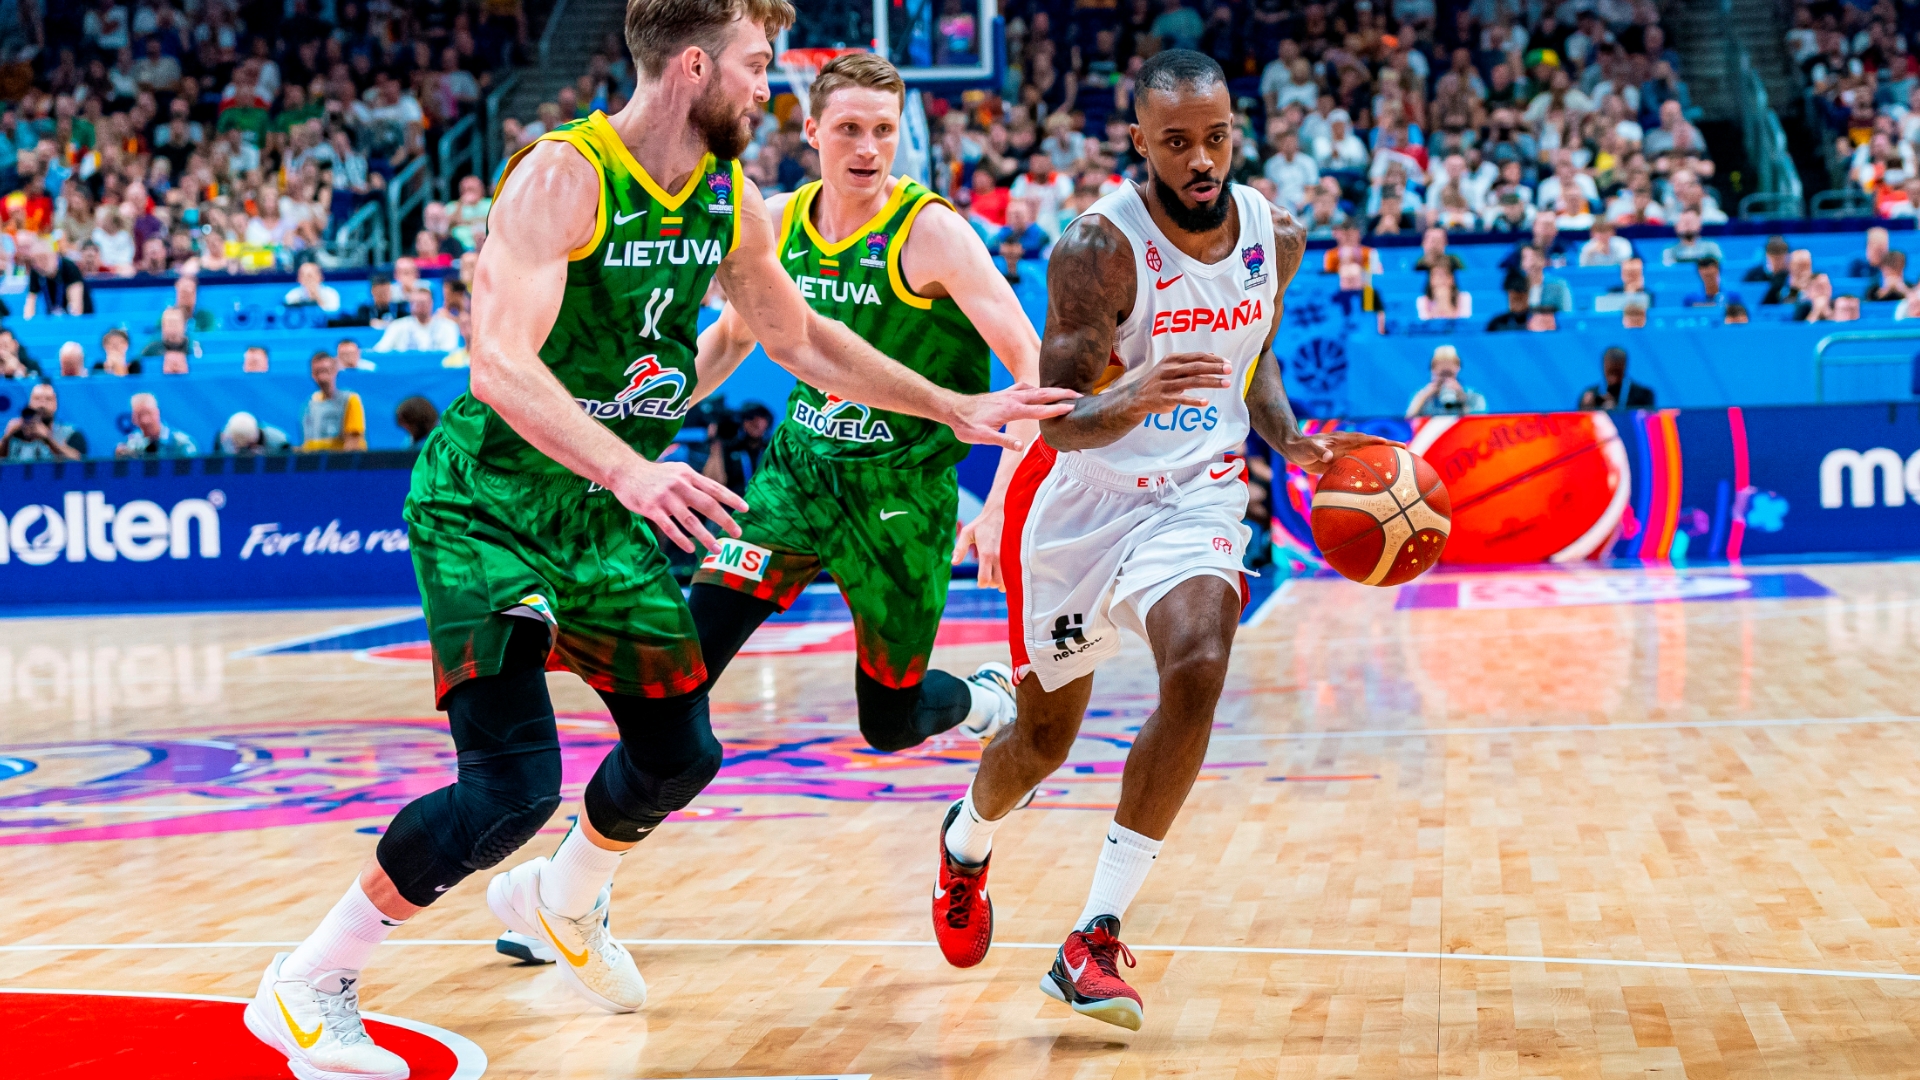 ¿Dónde ver Eurobasket en TV